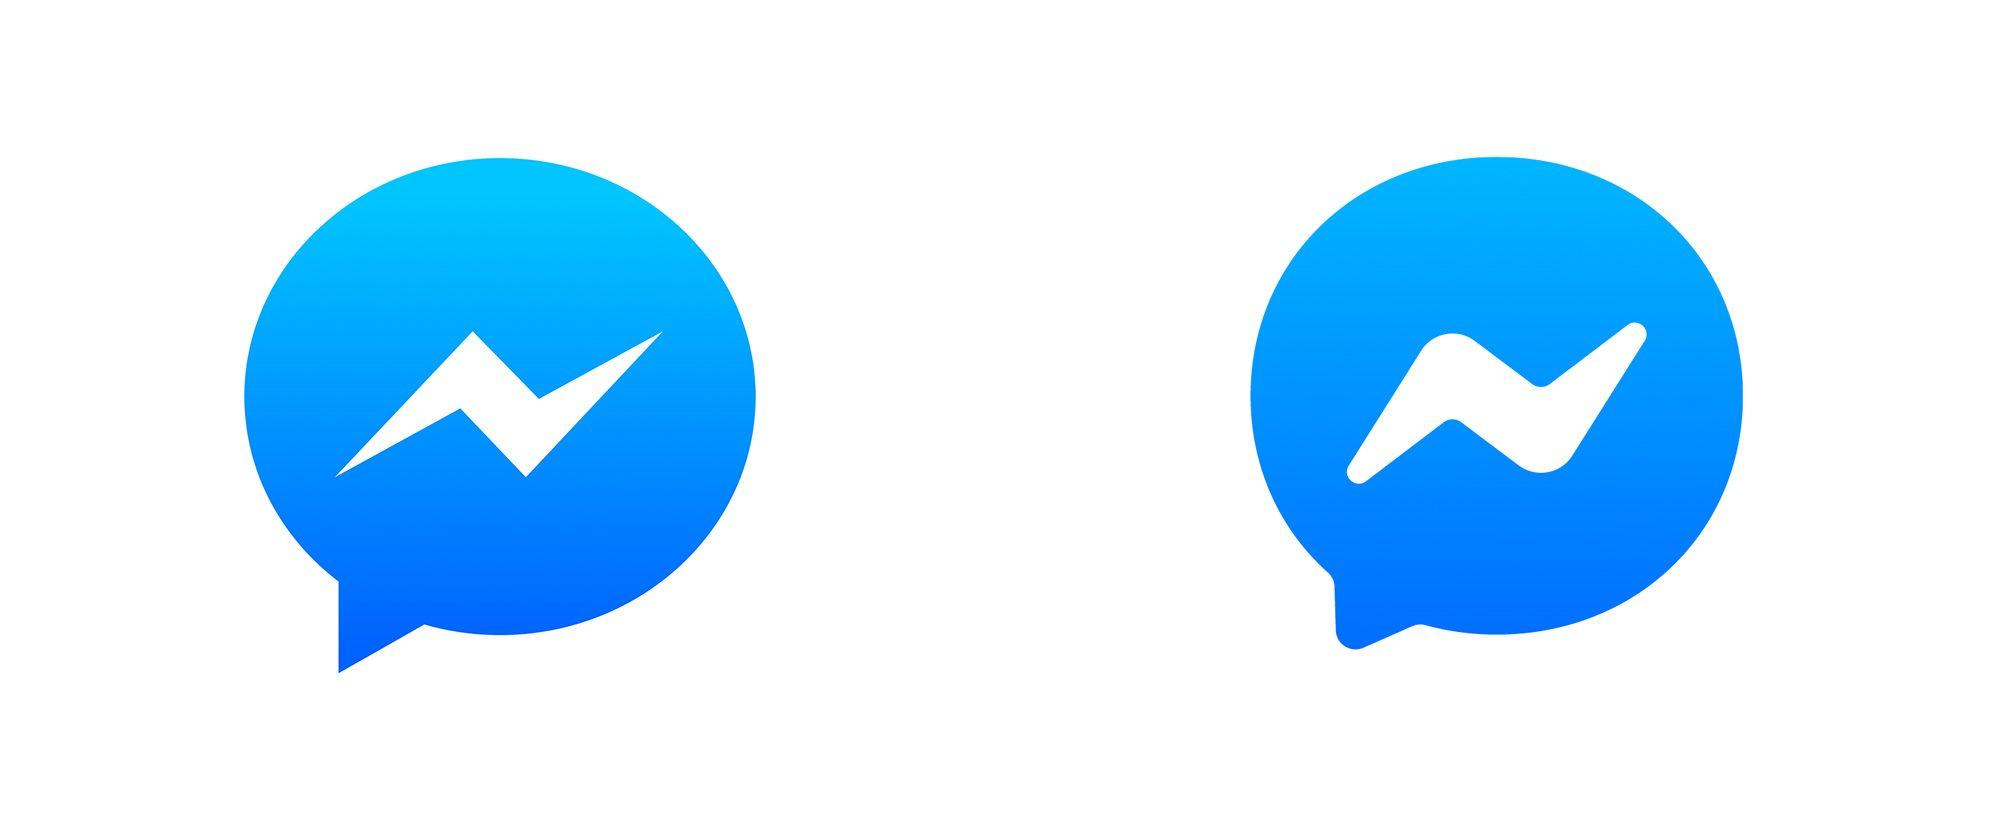 New Facebook Messenger Logo - Brand New: New Icon for Facebook Messenger